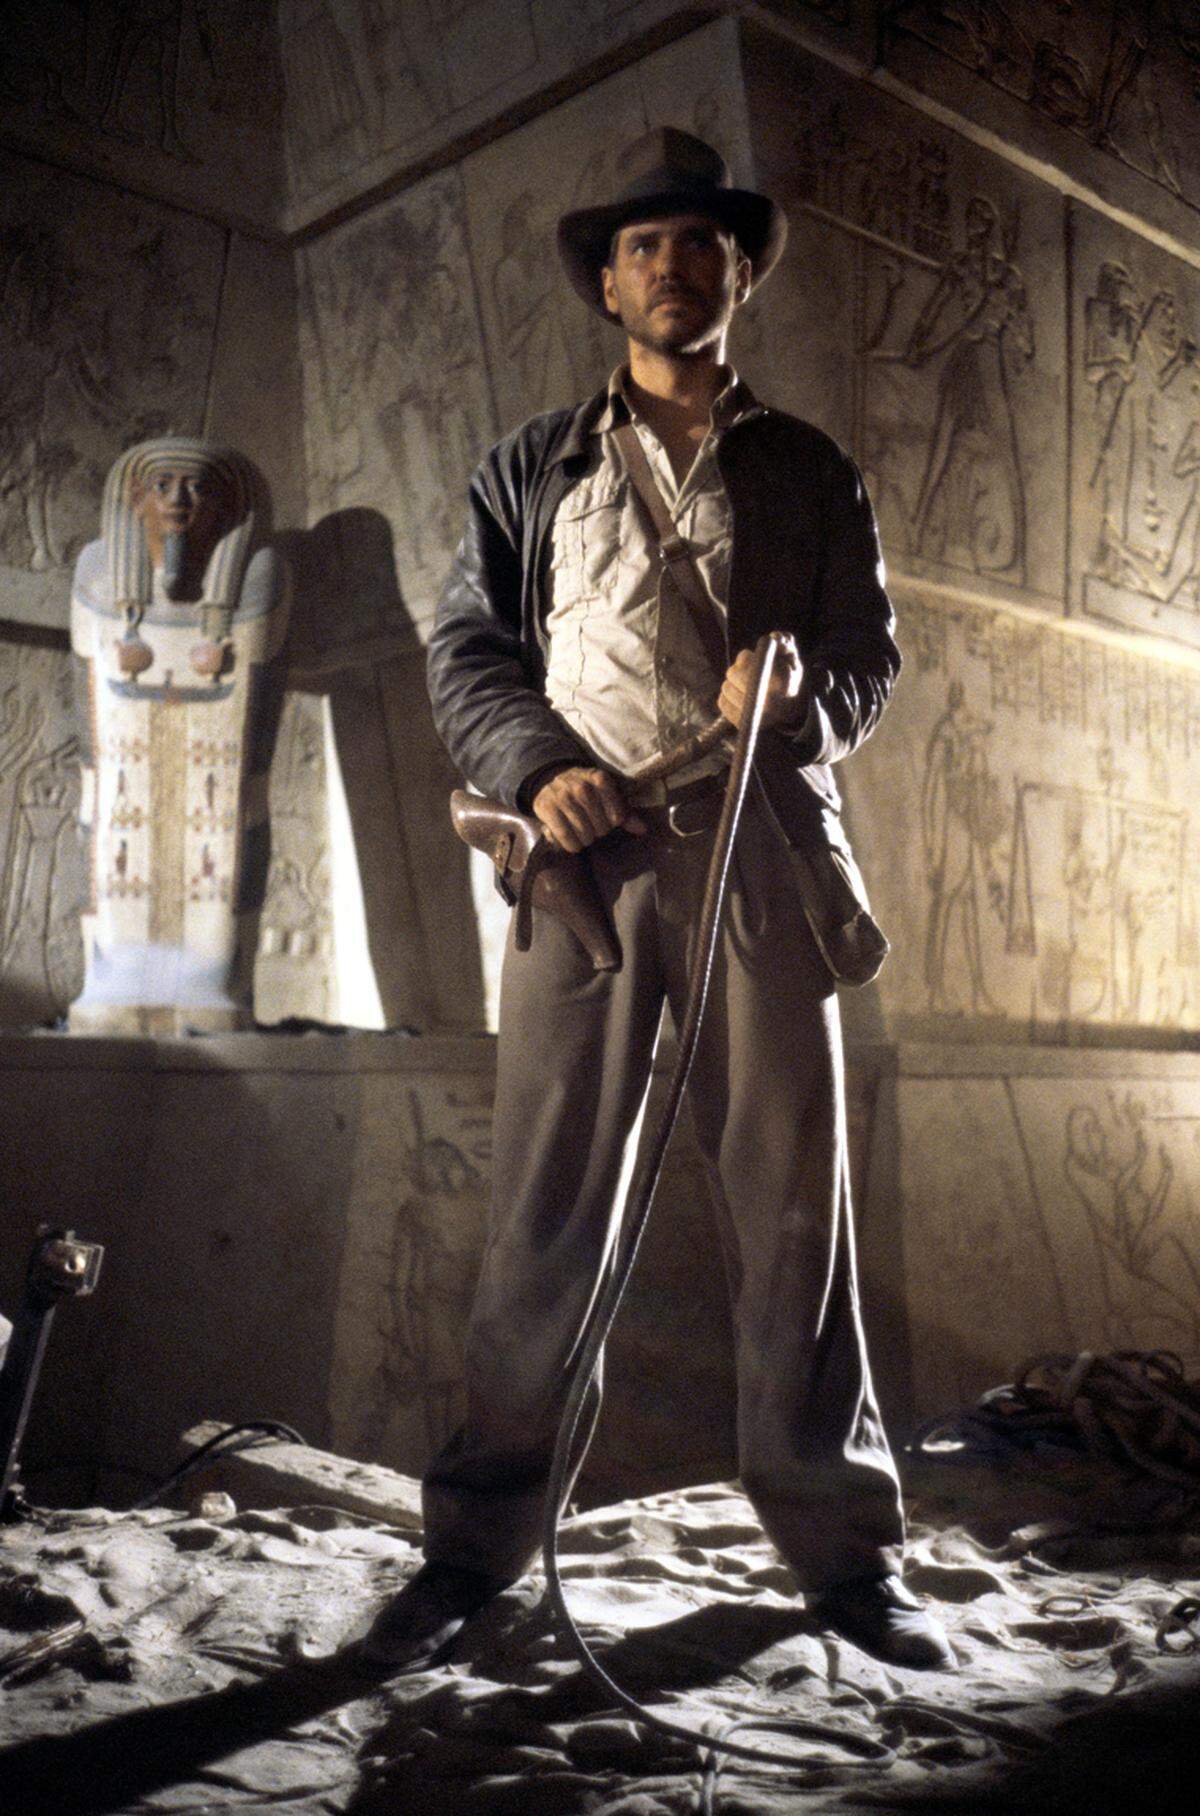 Harrison Ford als Indiana Jones in 'Raiders of the Lost Ark', 1981. Kostümdesign von Deborah Nadoolman. Lucasfilm/Paramount/The Kobal Collection.